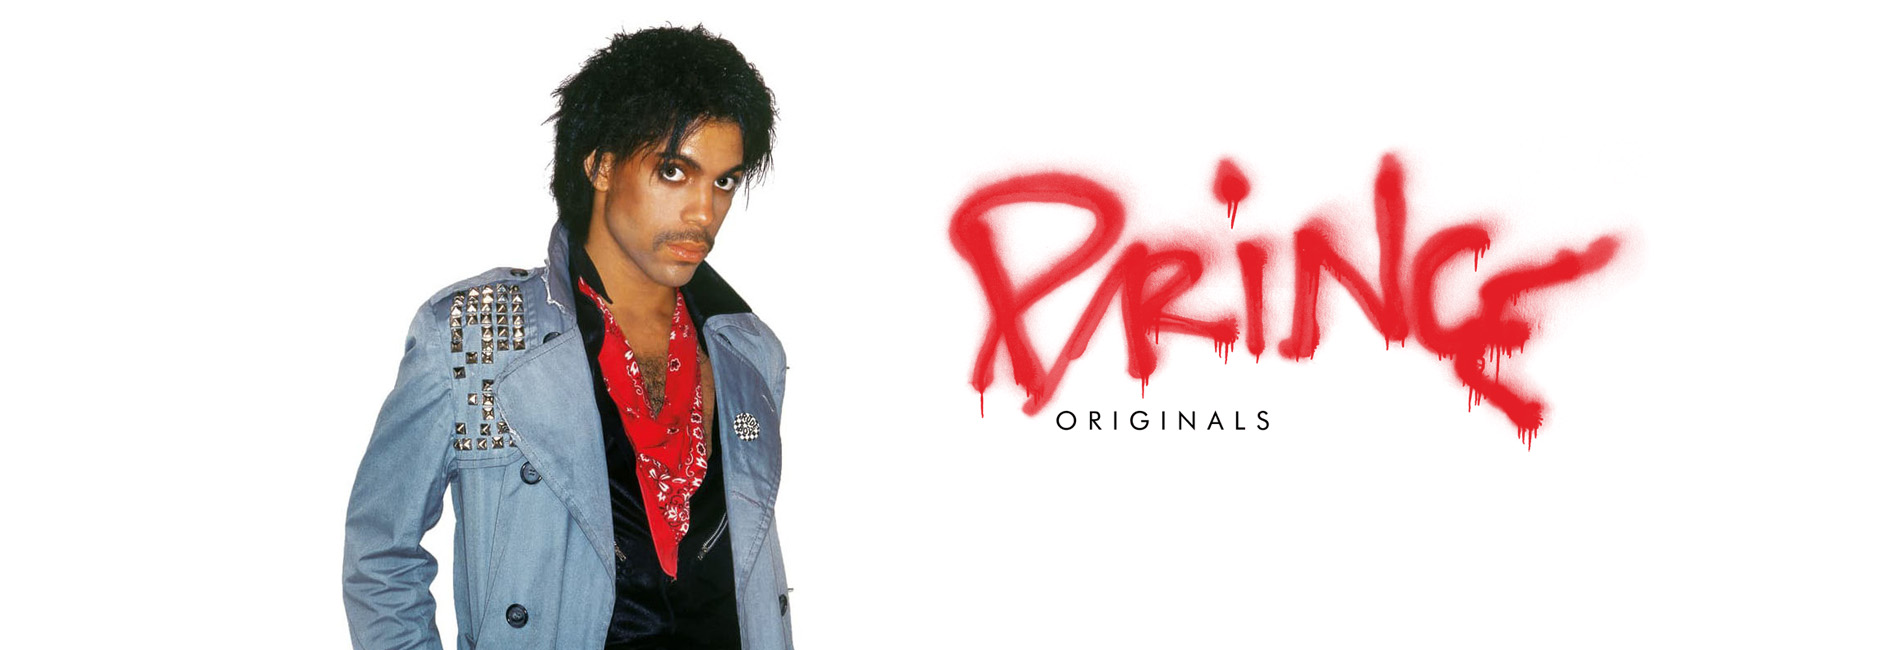 prince albums free listen